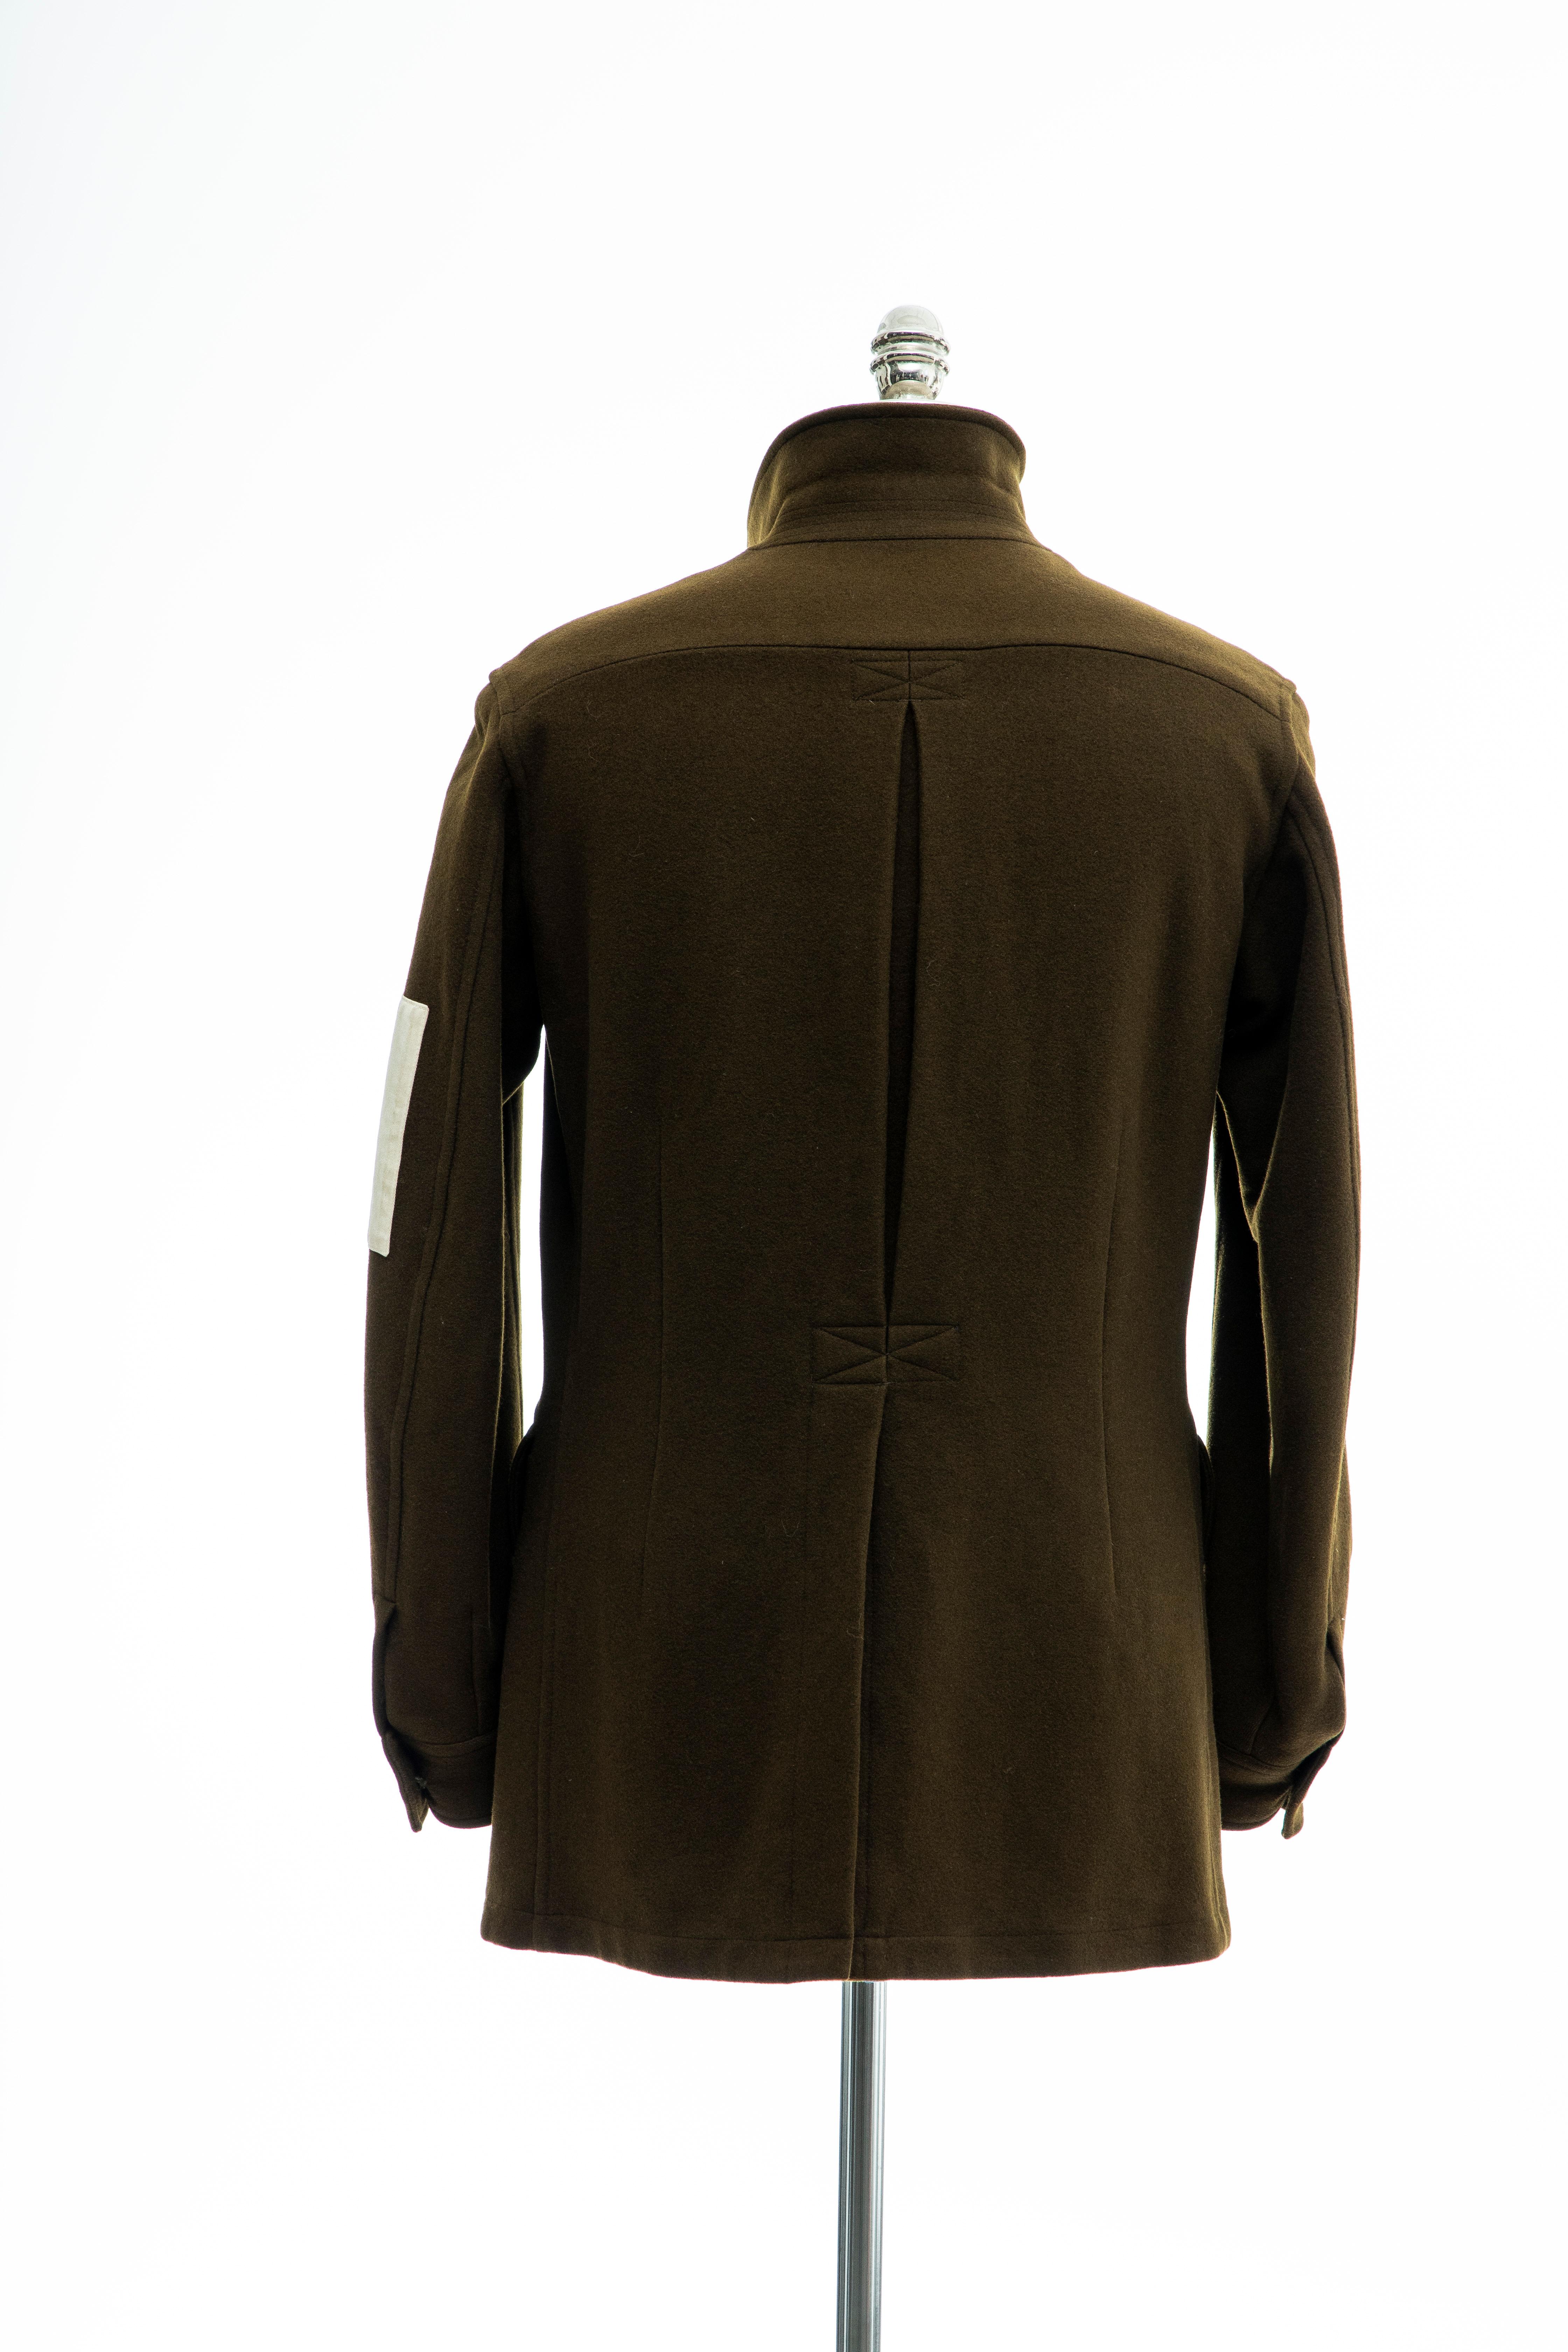 Yohji Yamamoto Pour Homme Men's Wool & Cashmere Printed Patch Jacket, Fall 2003 4